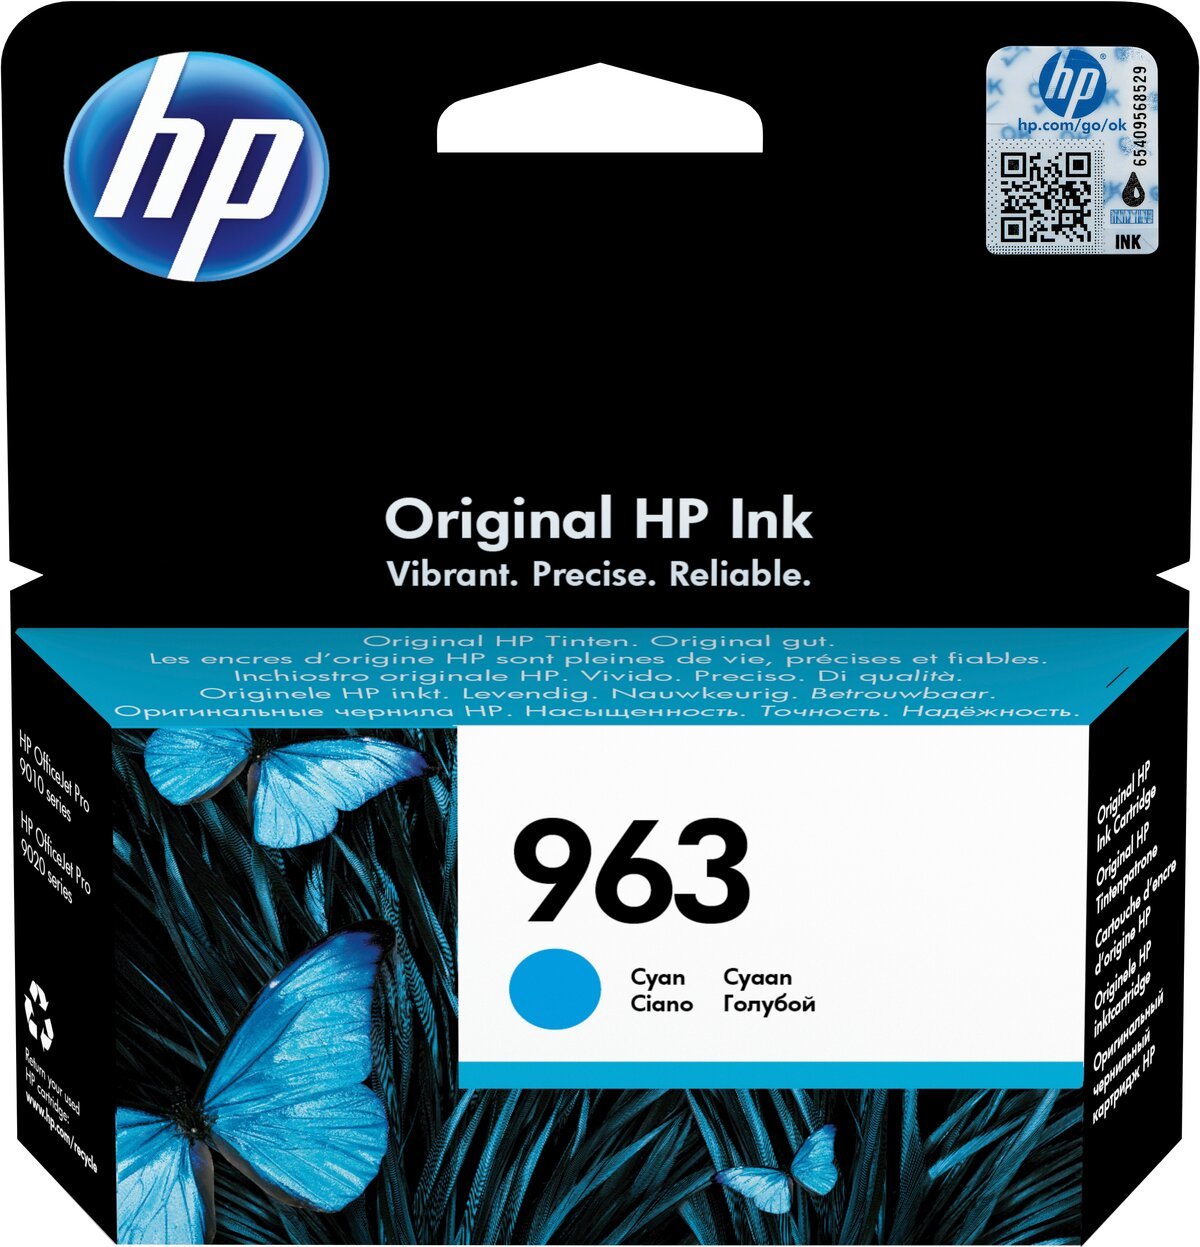 HP Tusz 963 3JA23AE Cyan Original Ink Cartridge widok od przodu na opakowanie